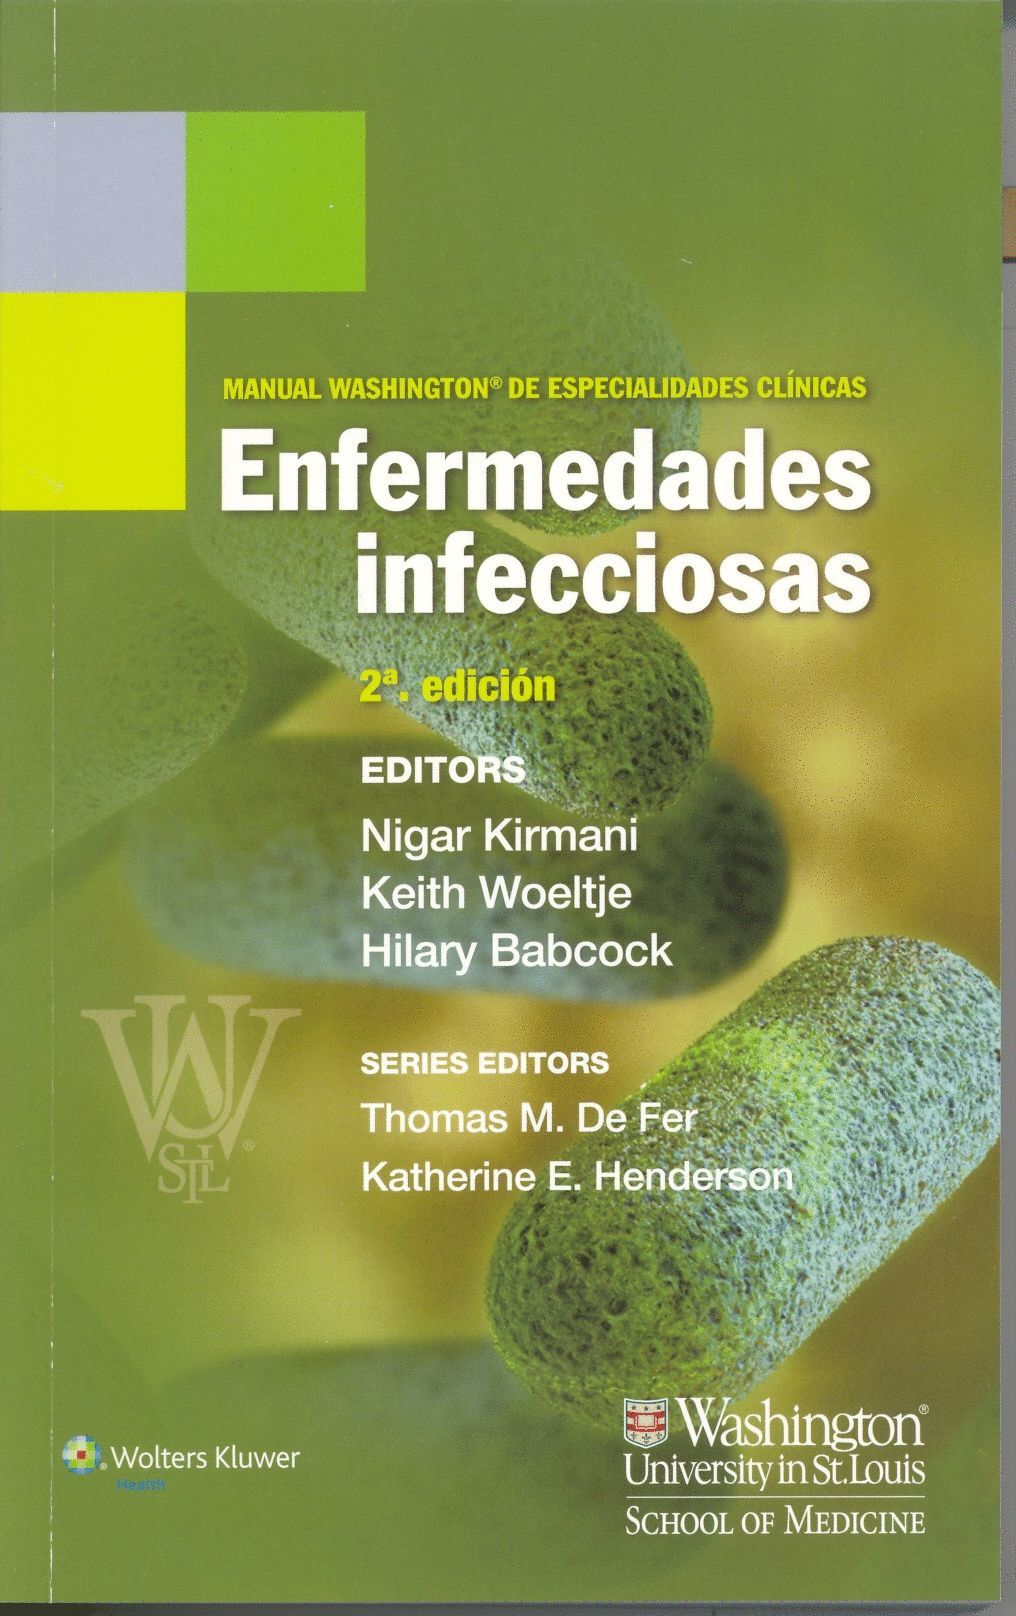 MANUAL WASHINGTON DE ESPECIALIDADES CLNICAS. ENFERMEDADES INFECCIOSAS